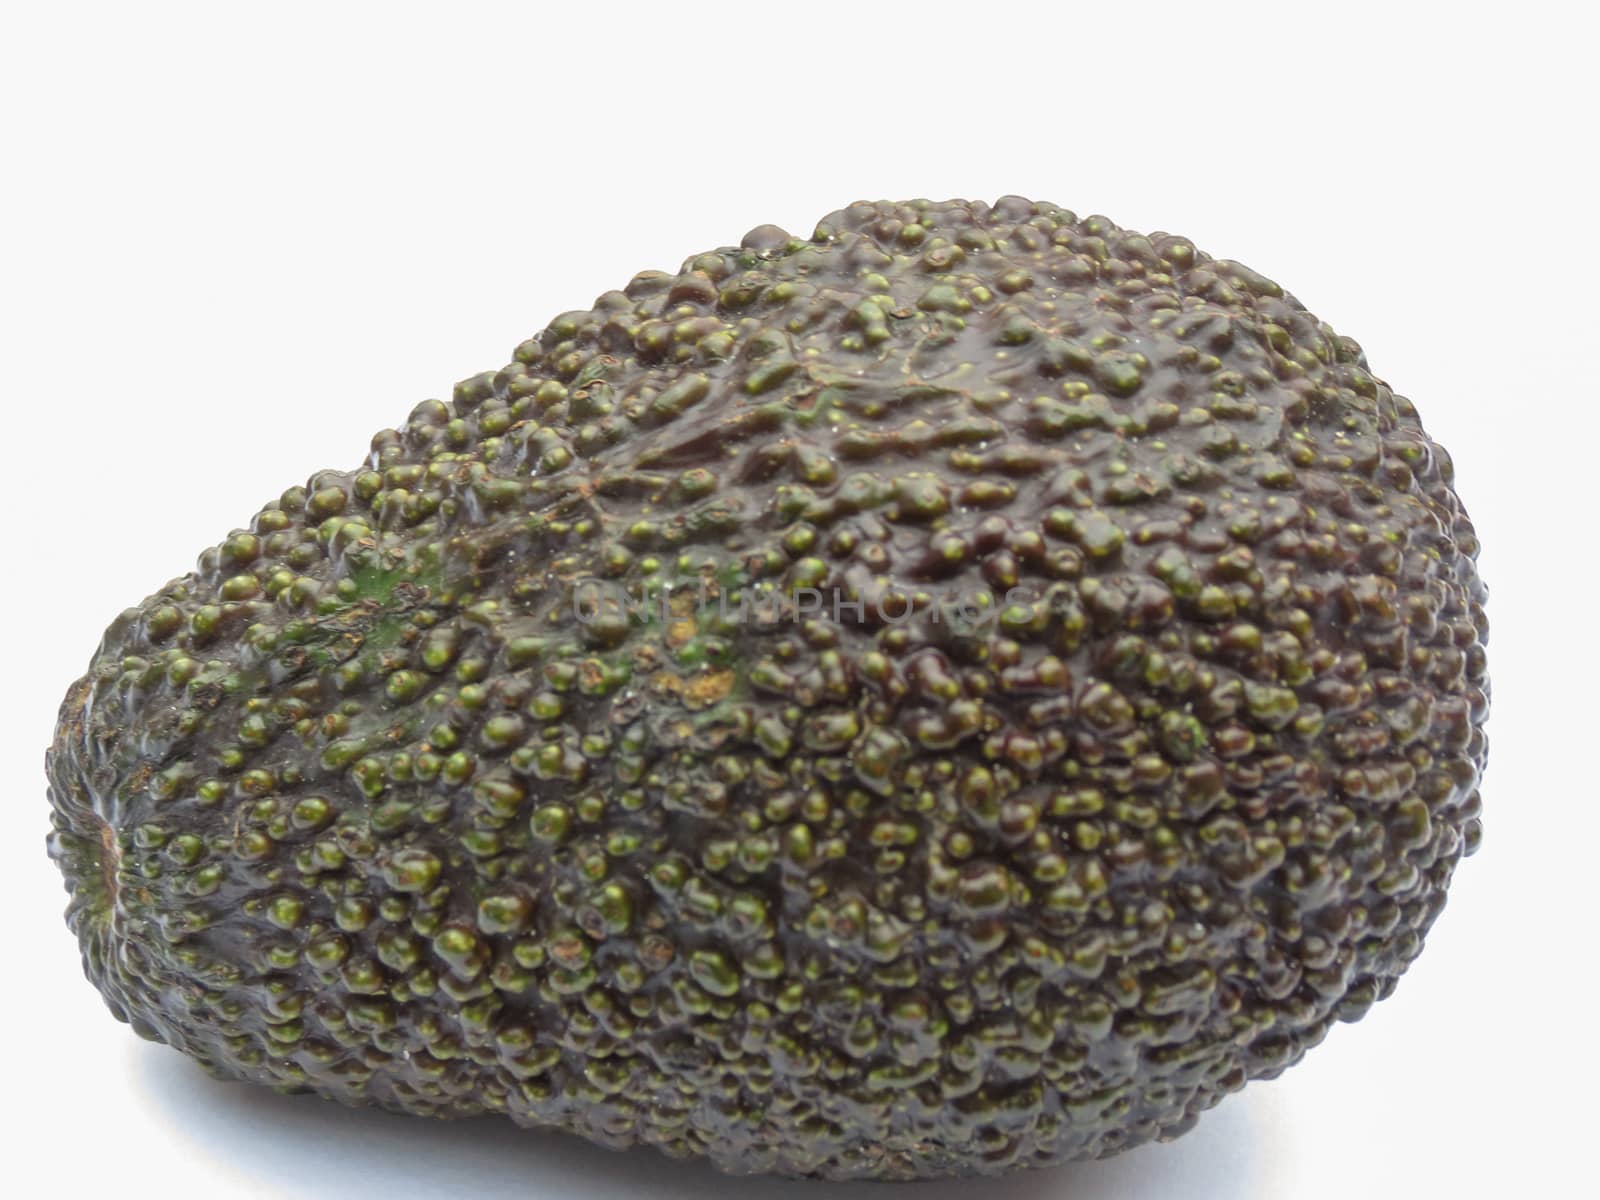 A ripe avocado fruit over white background